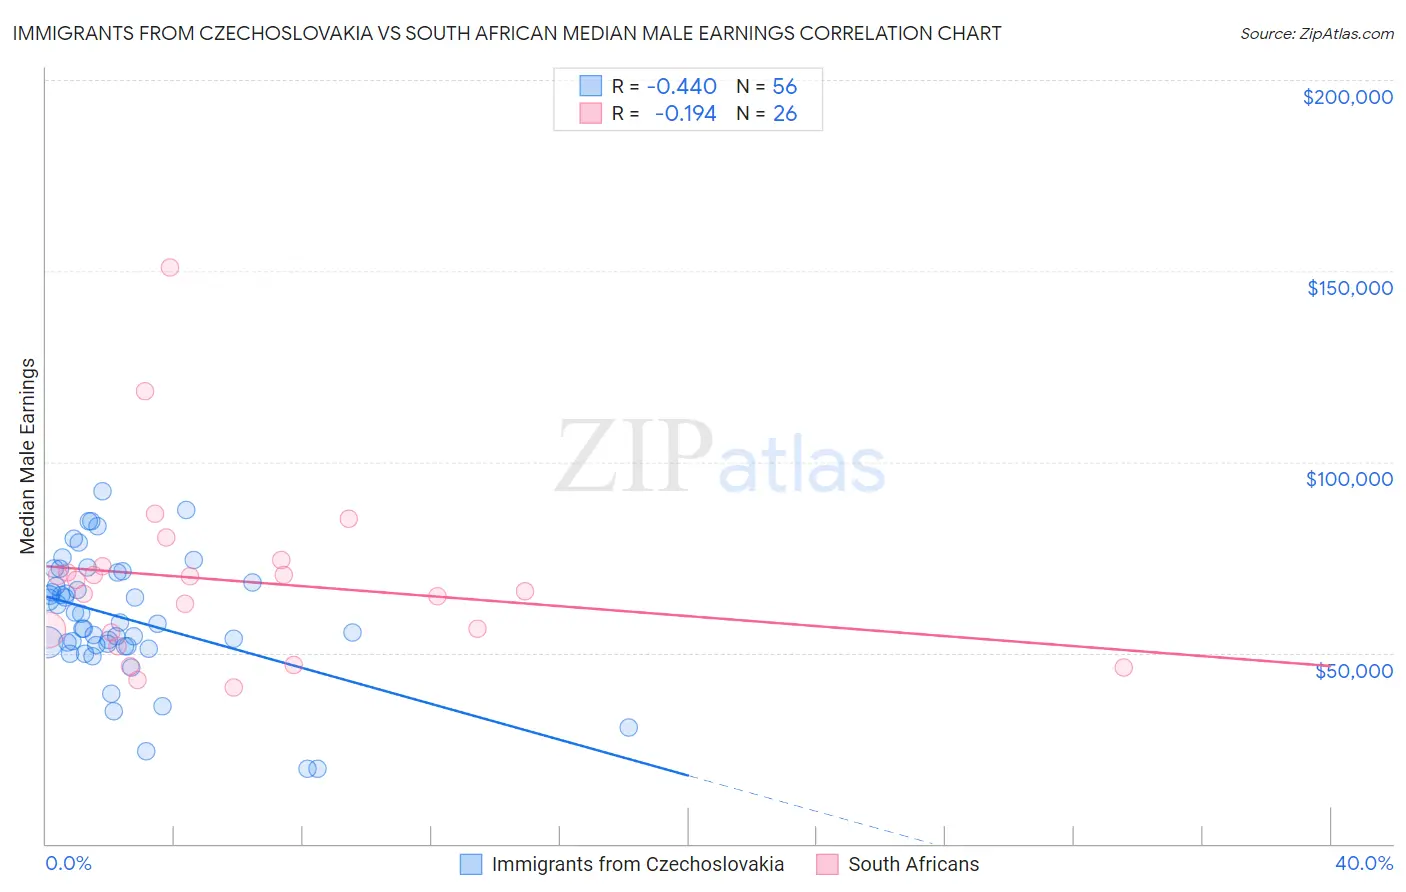 Immigrants from Czechoslovakia vs South African Median Male Earnings